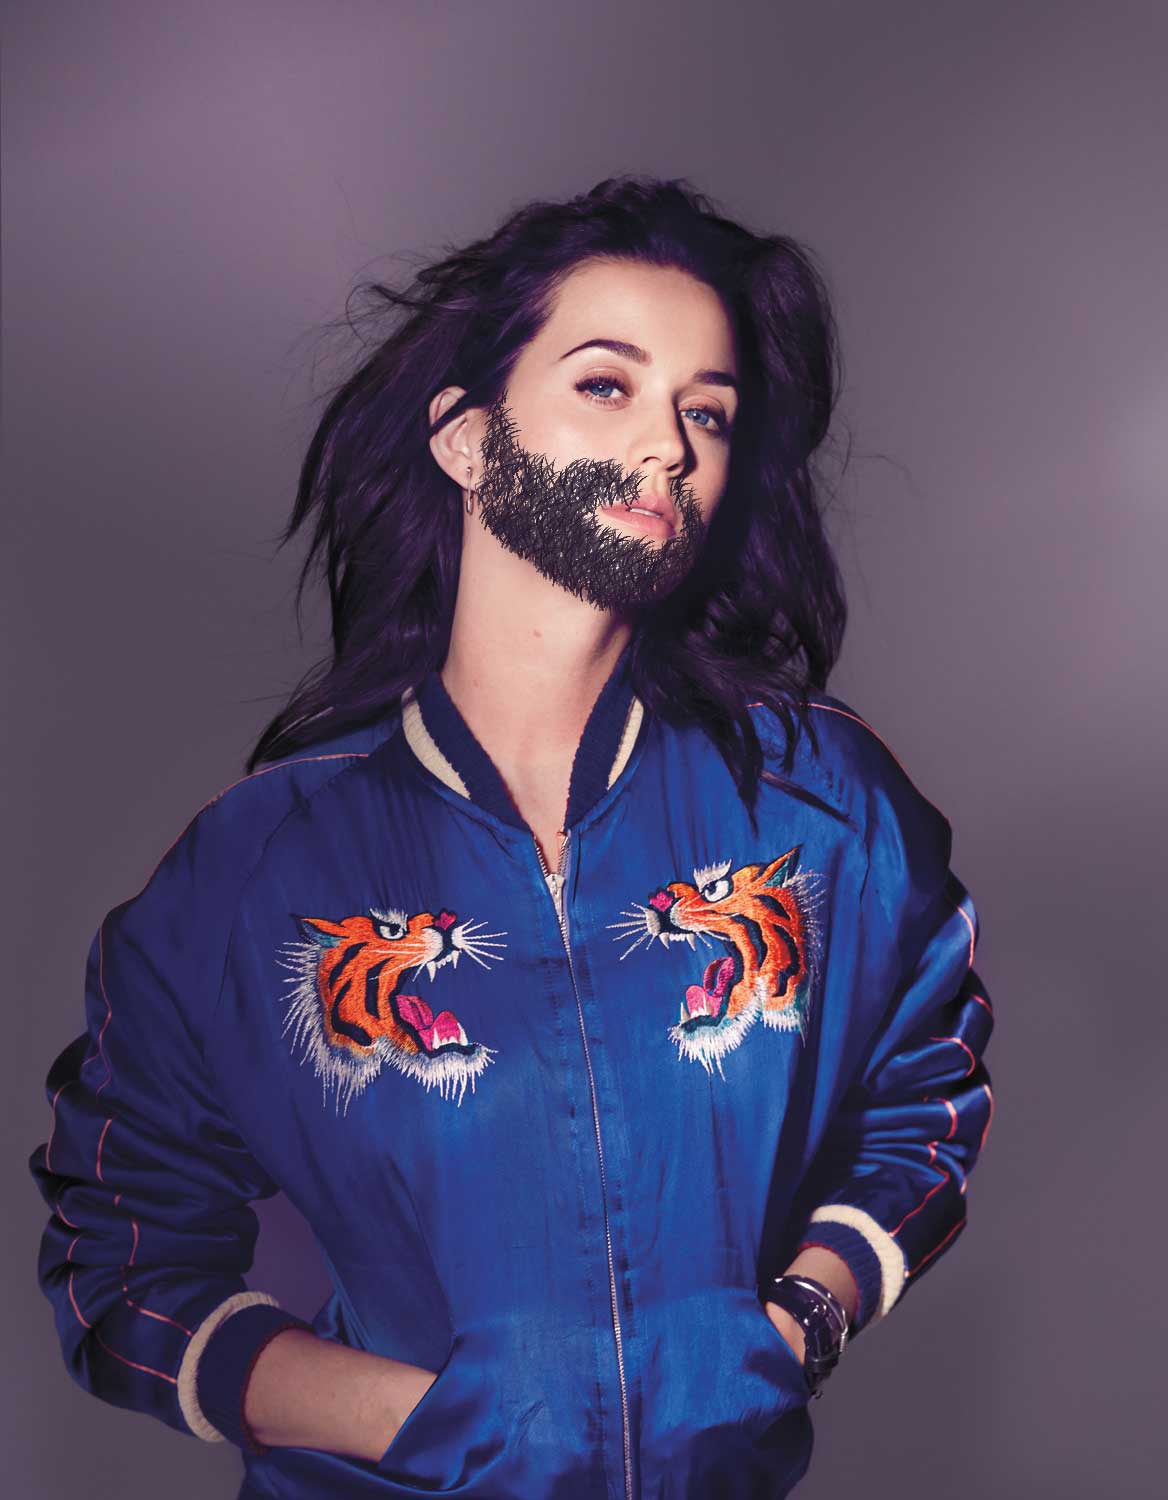 Katy Perry with a beard